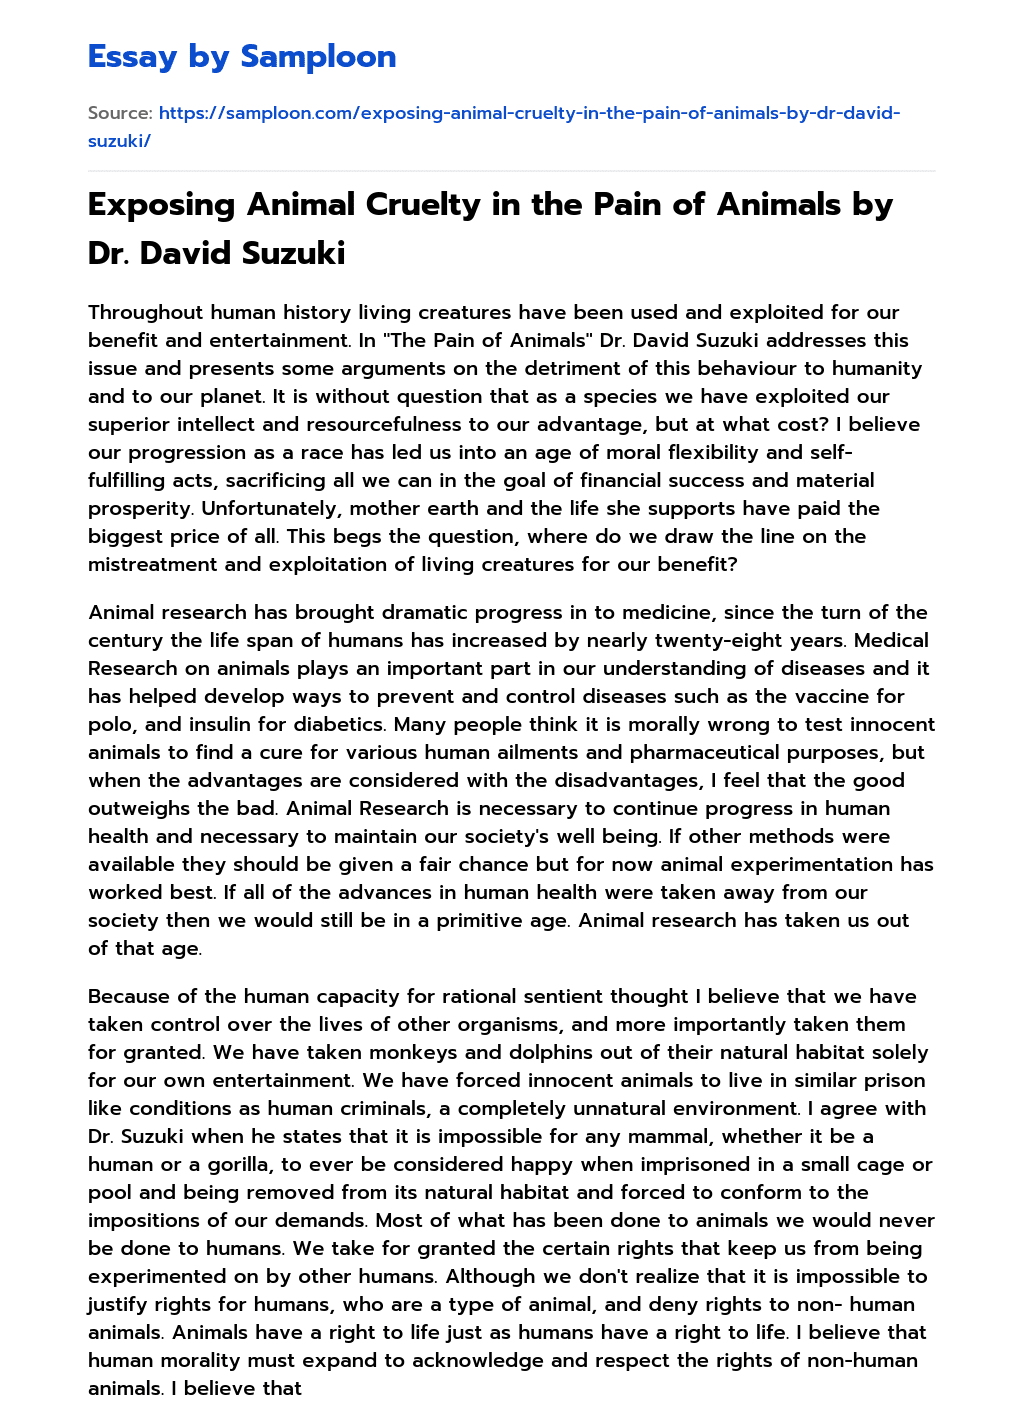 Exposing Animal Cruelty in the Pain of Animals by Dr. David Suzuki essay